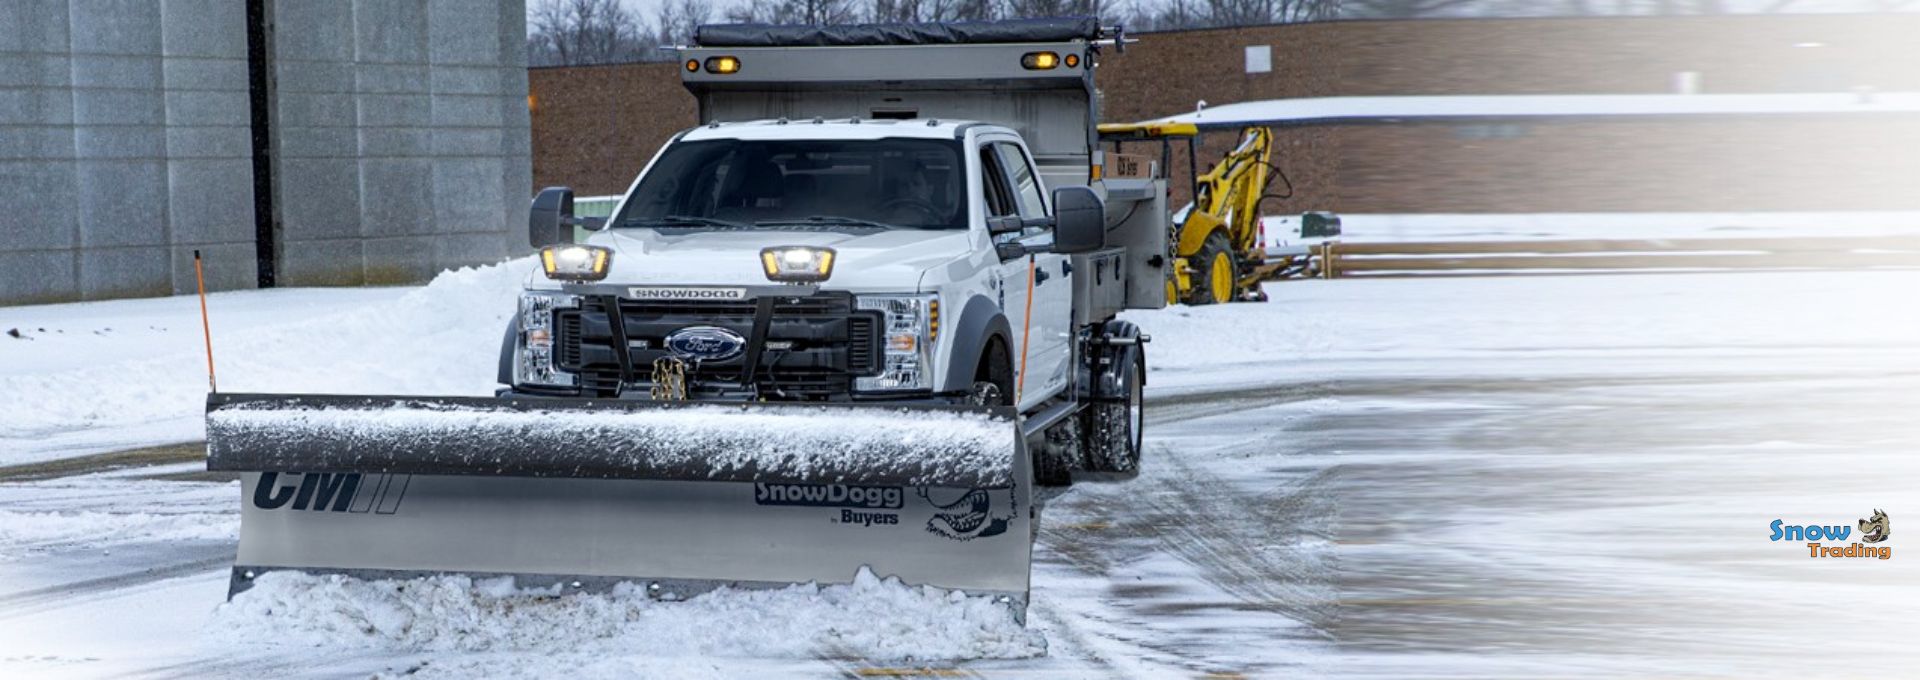 Snow plows for trucks